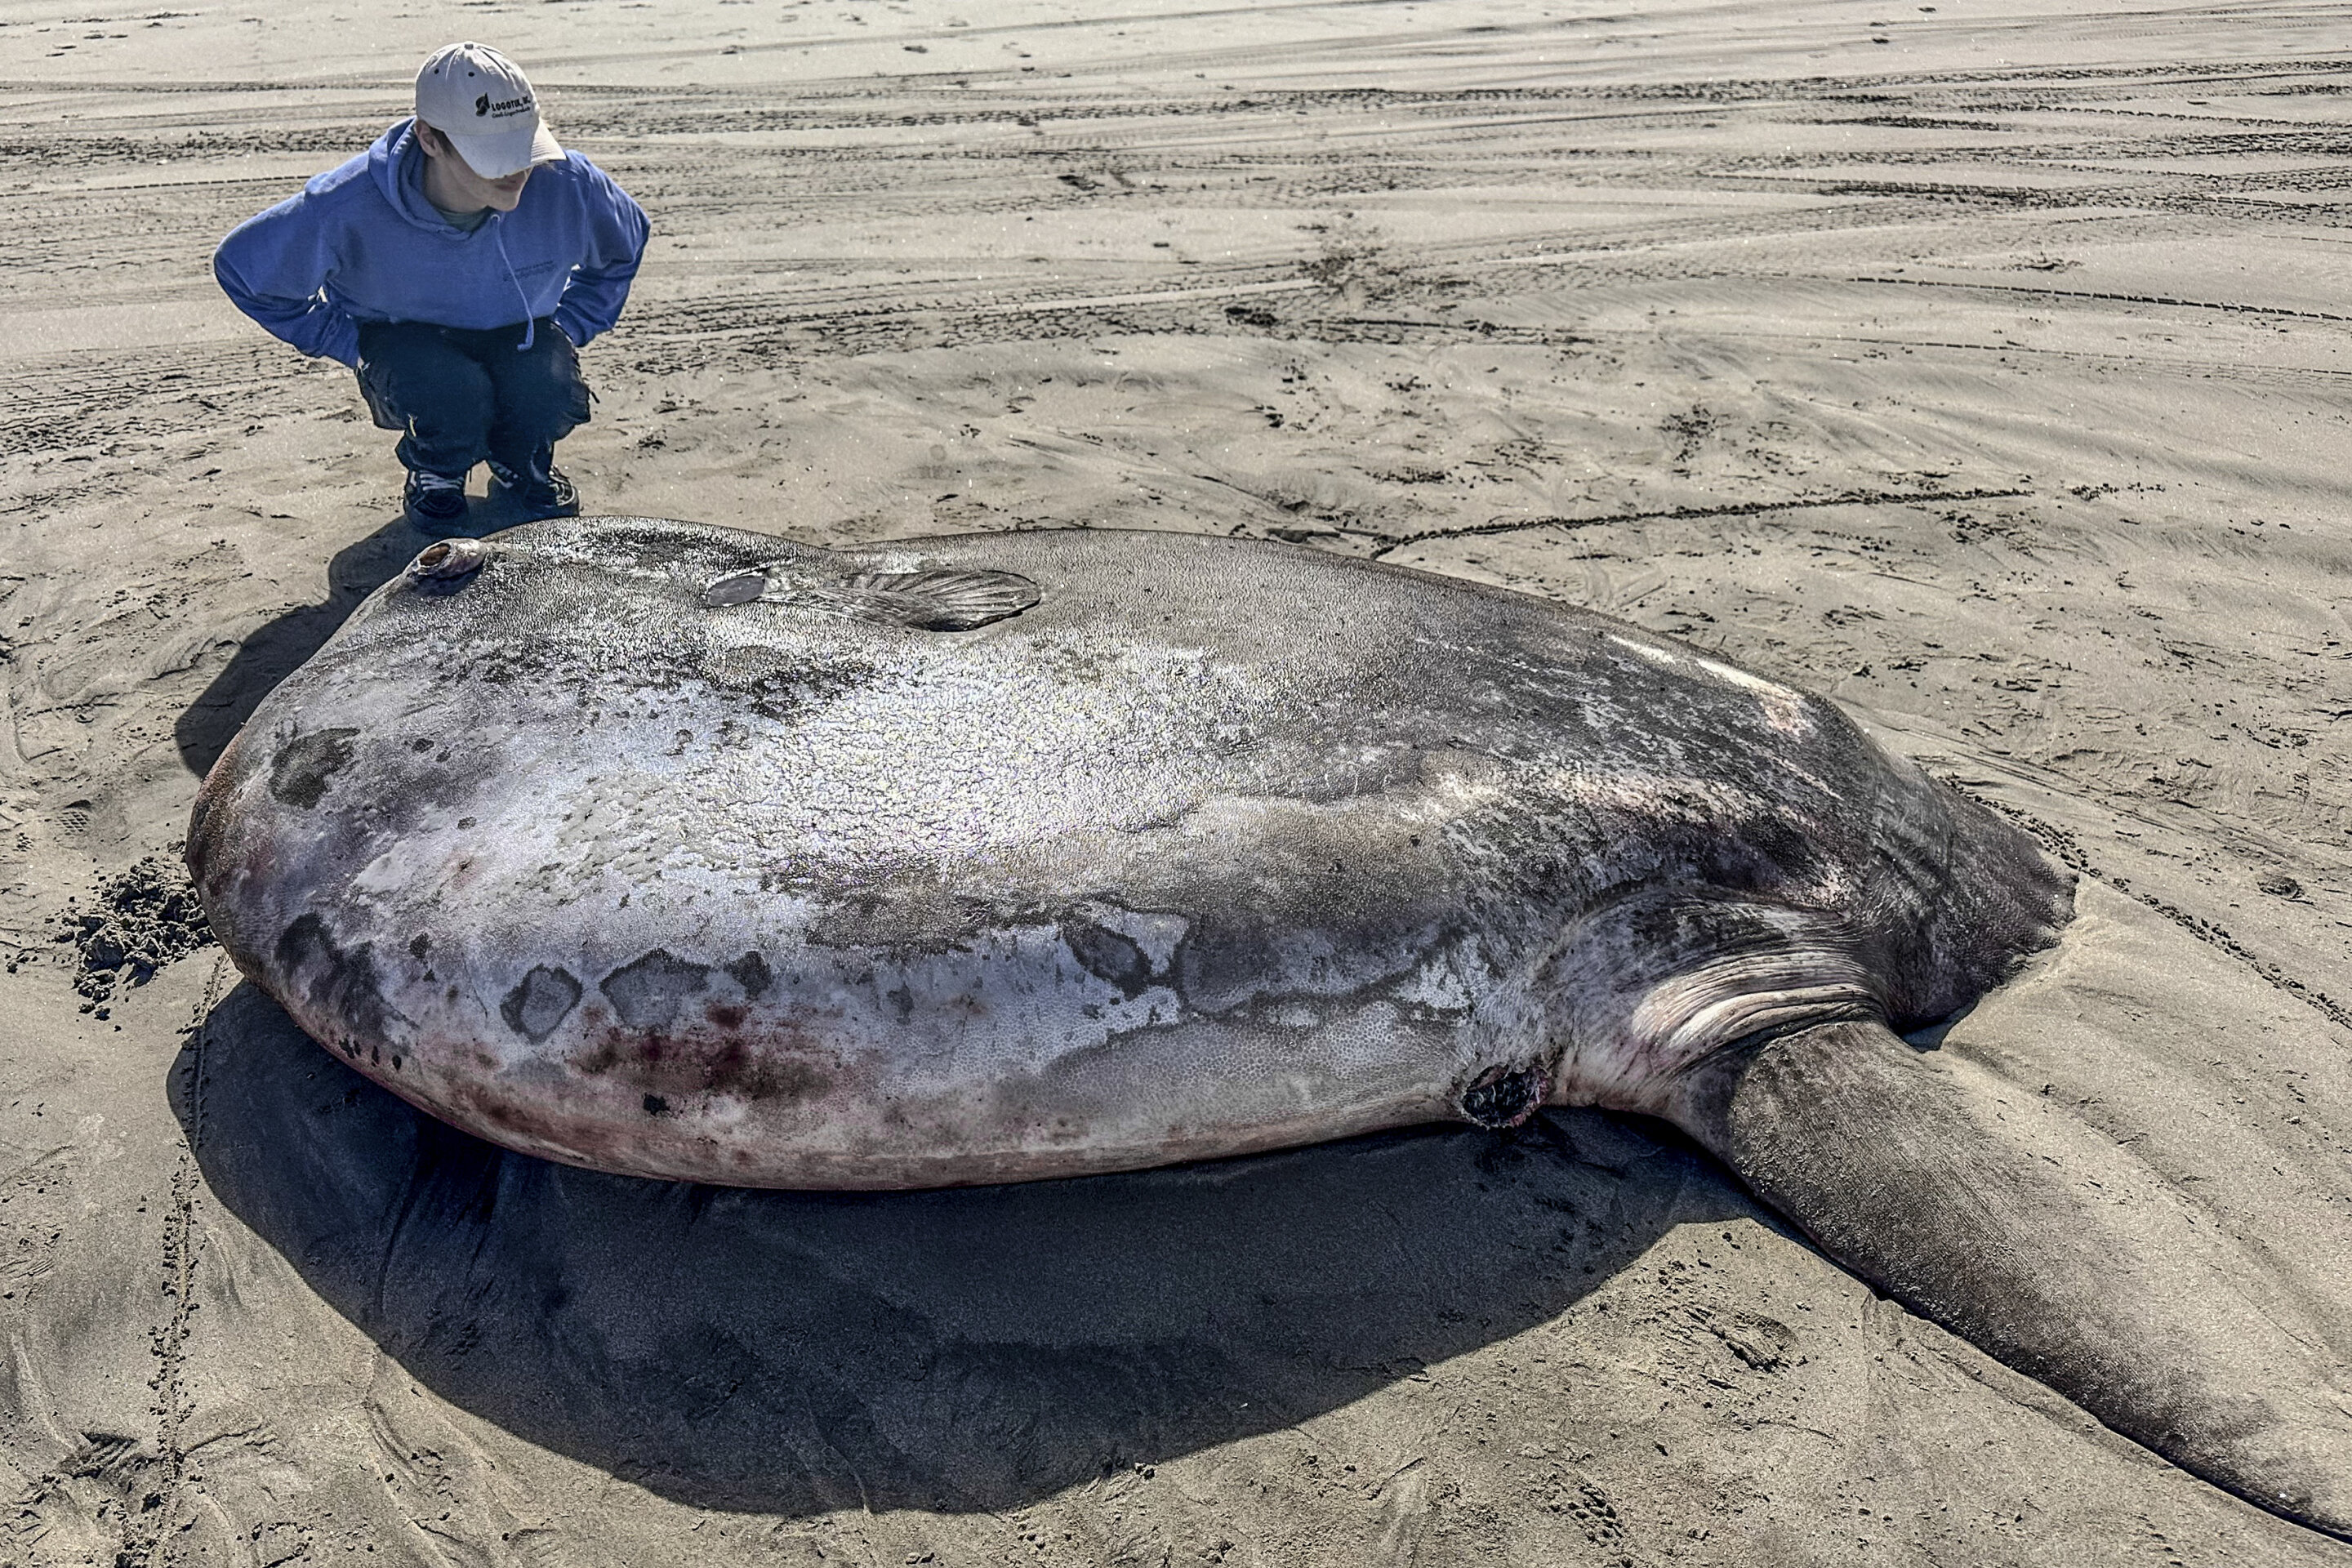 #Rare 7-foot fish washed ashore on Oregon’s coast garners worldwide attention